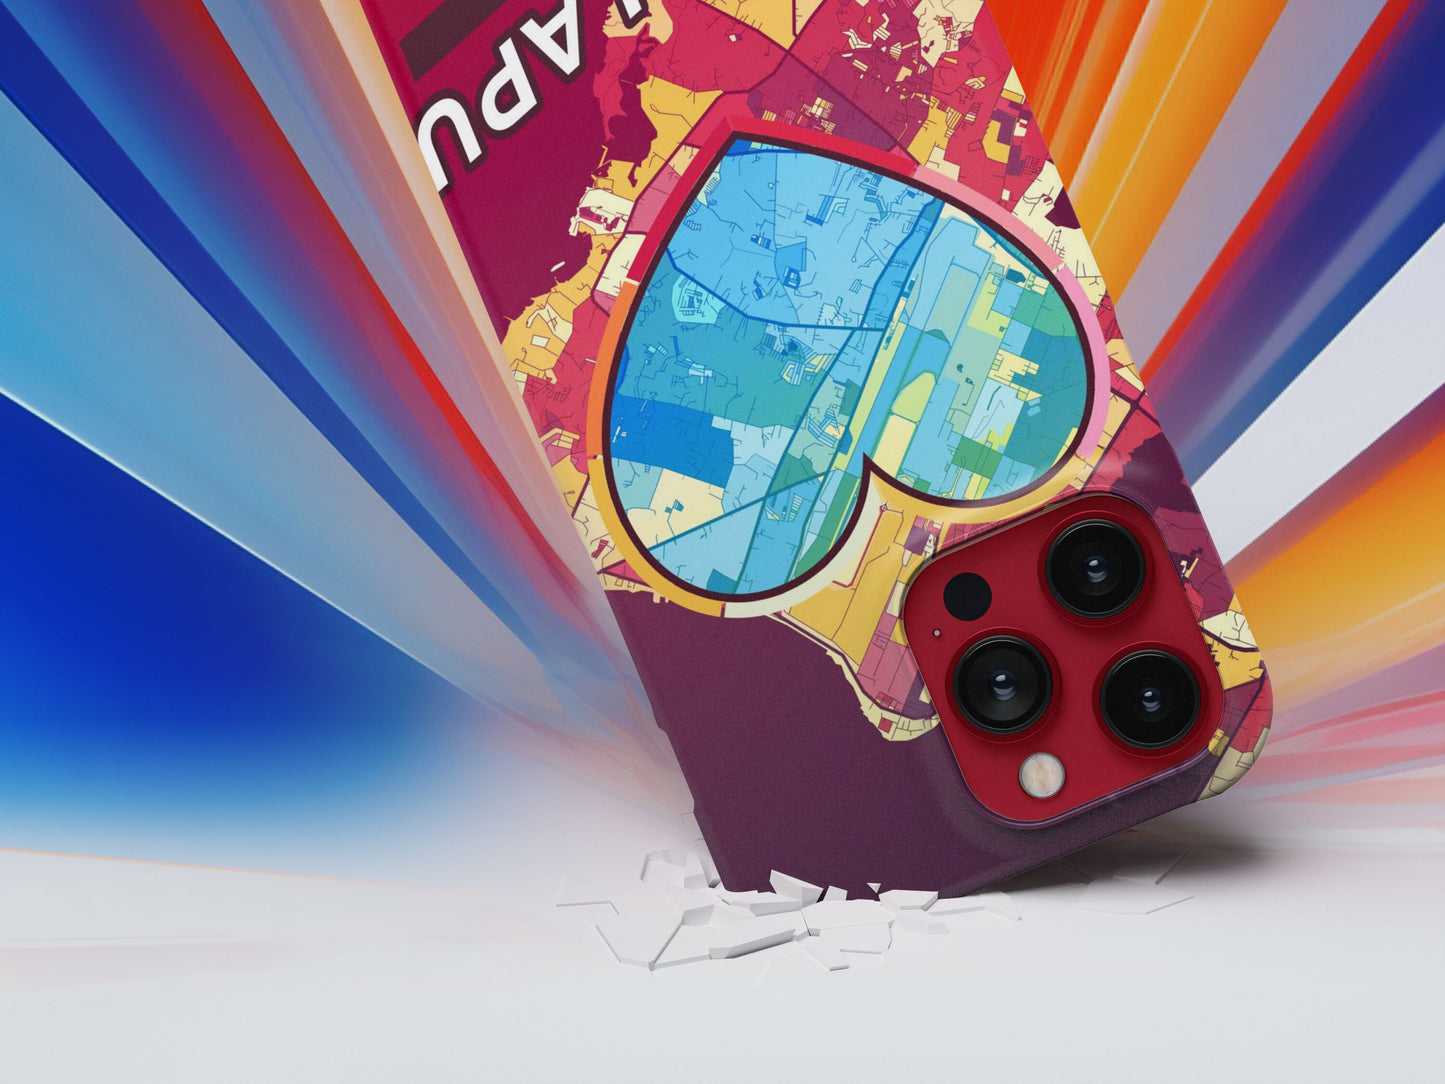 Lapu‑Lapu Philippines slim phone case with colorful icon. Birthday, wedding or housewarming gift. Couple match cases.